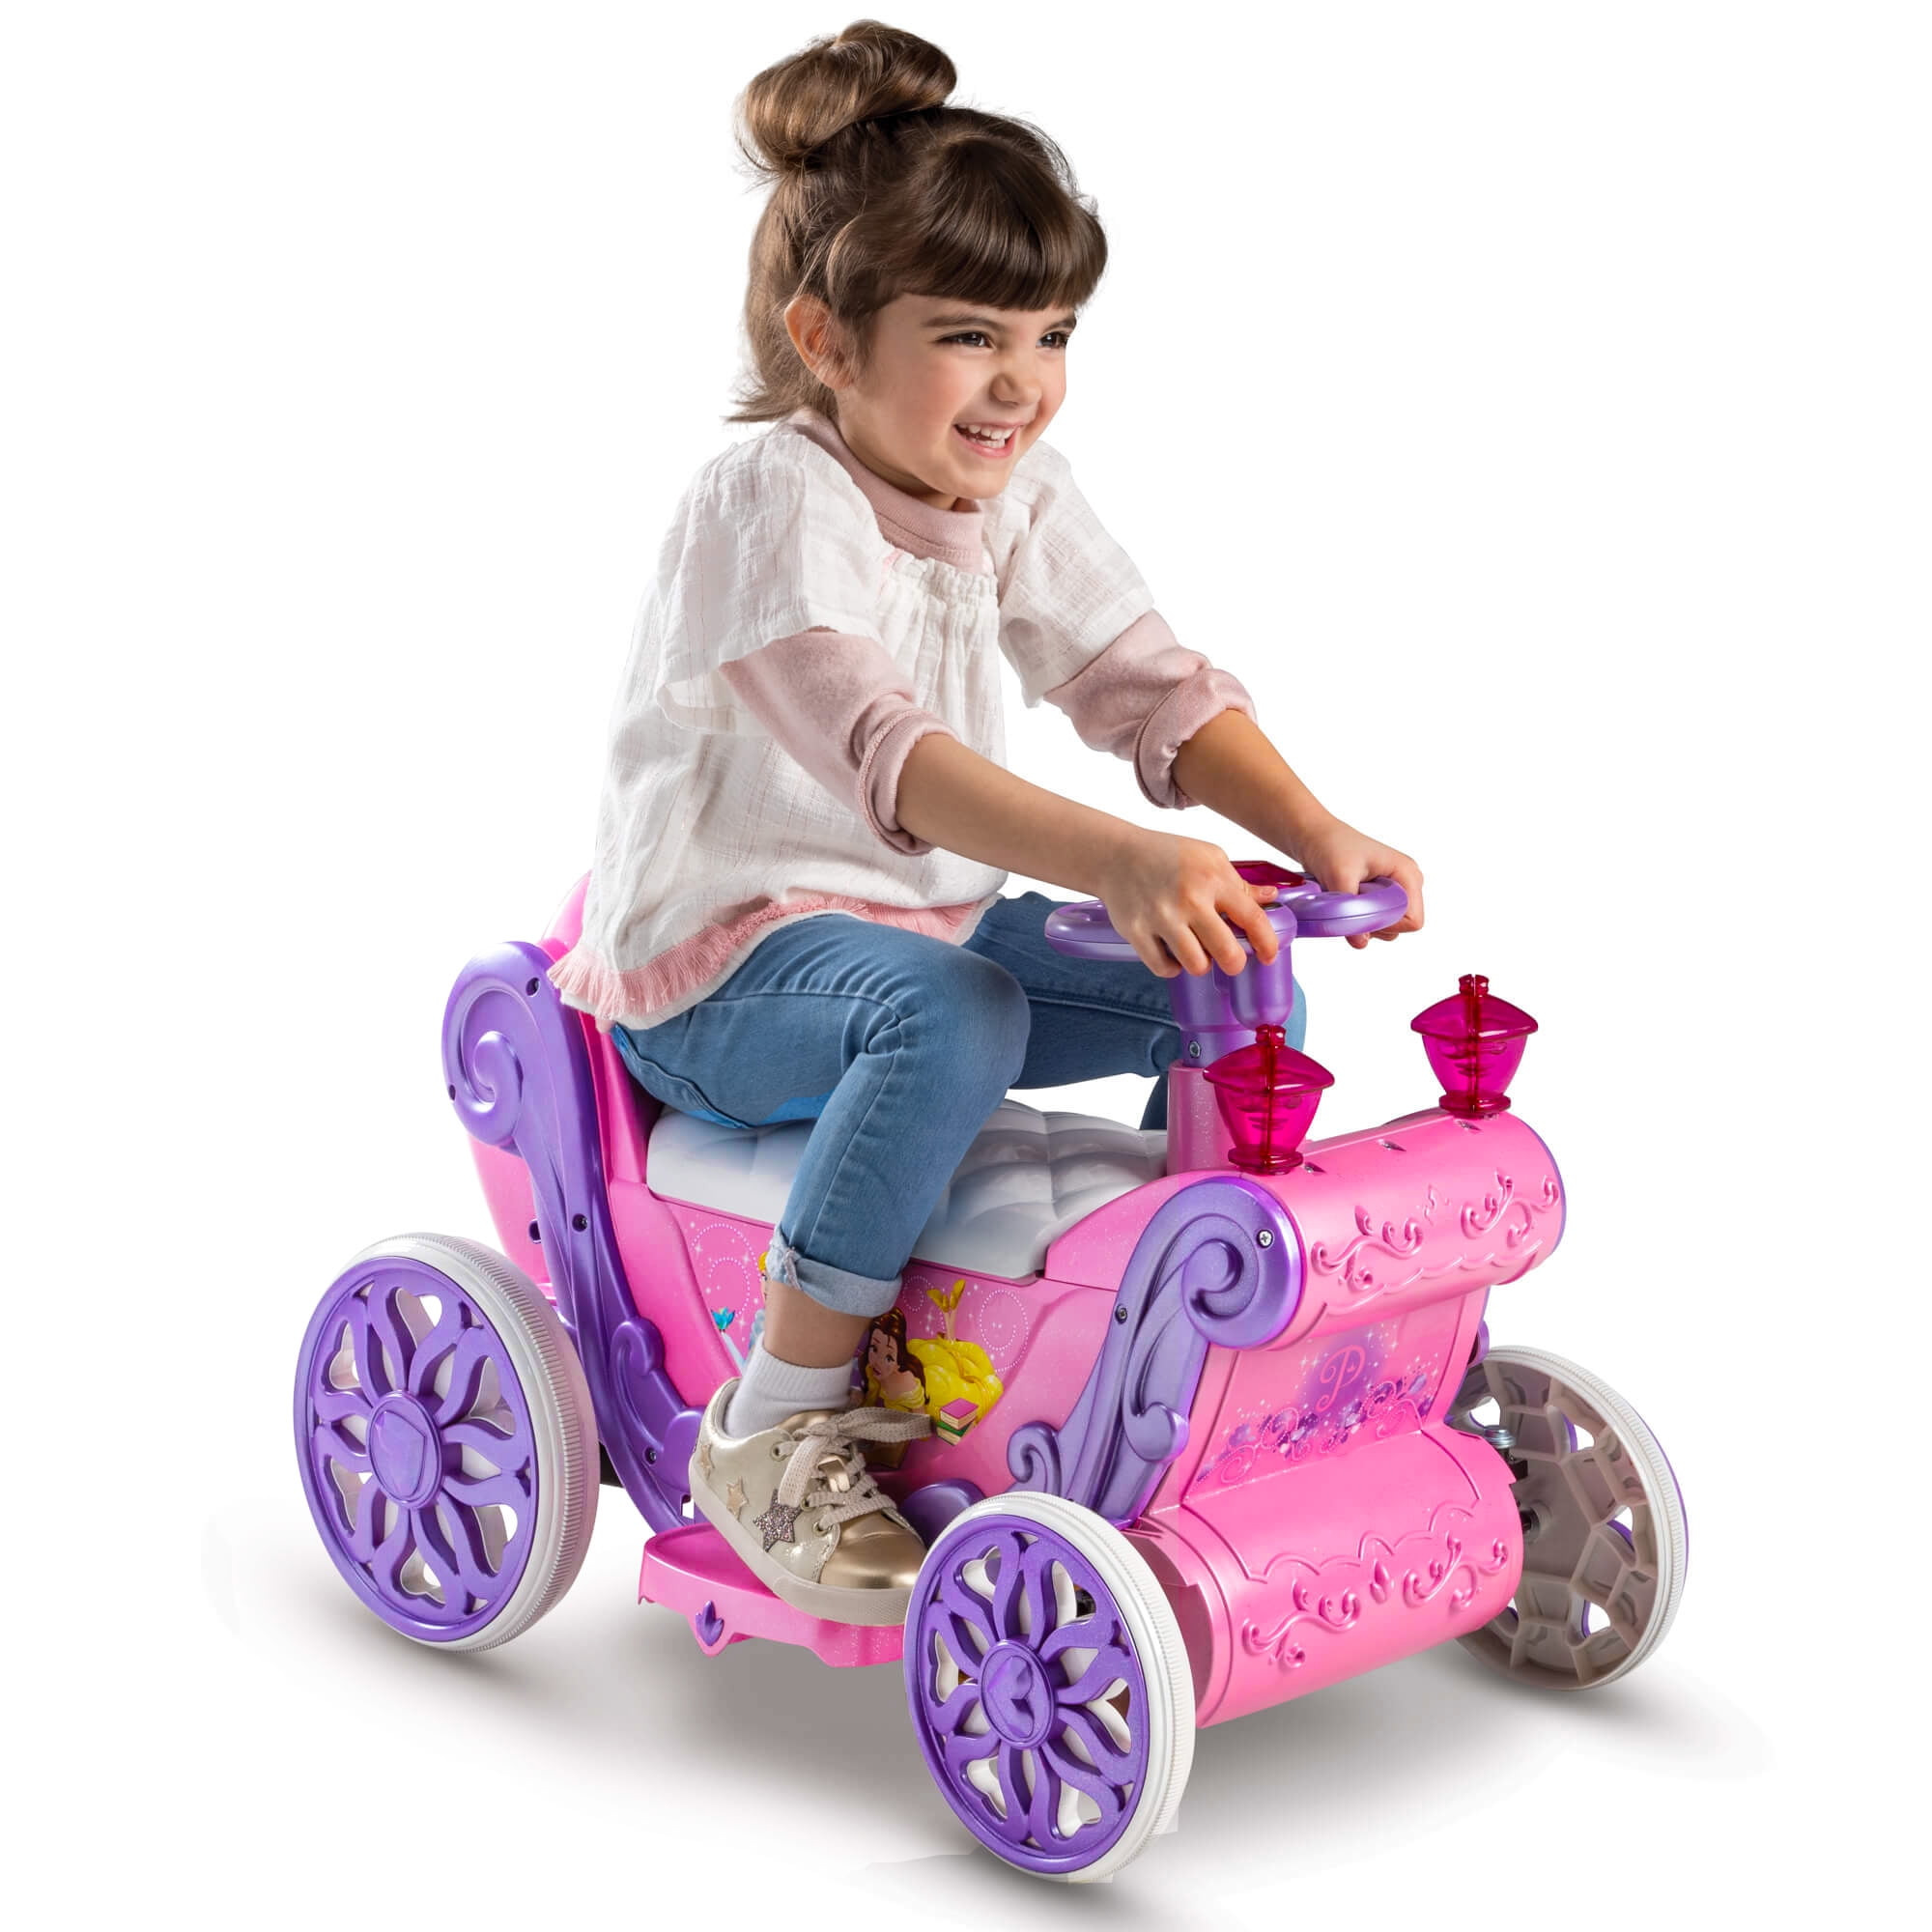 Disney Princess Girls’ 6V BatteryPowered RideOn Quad Toy